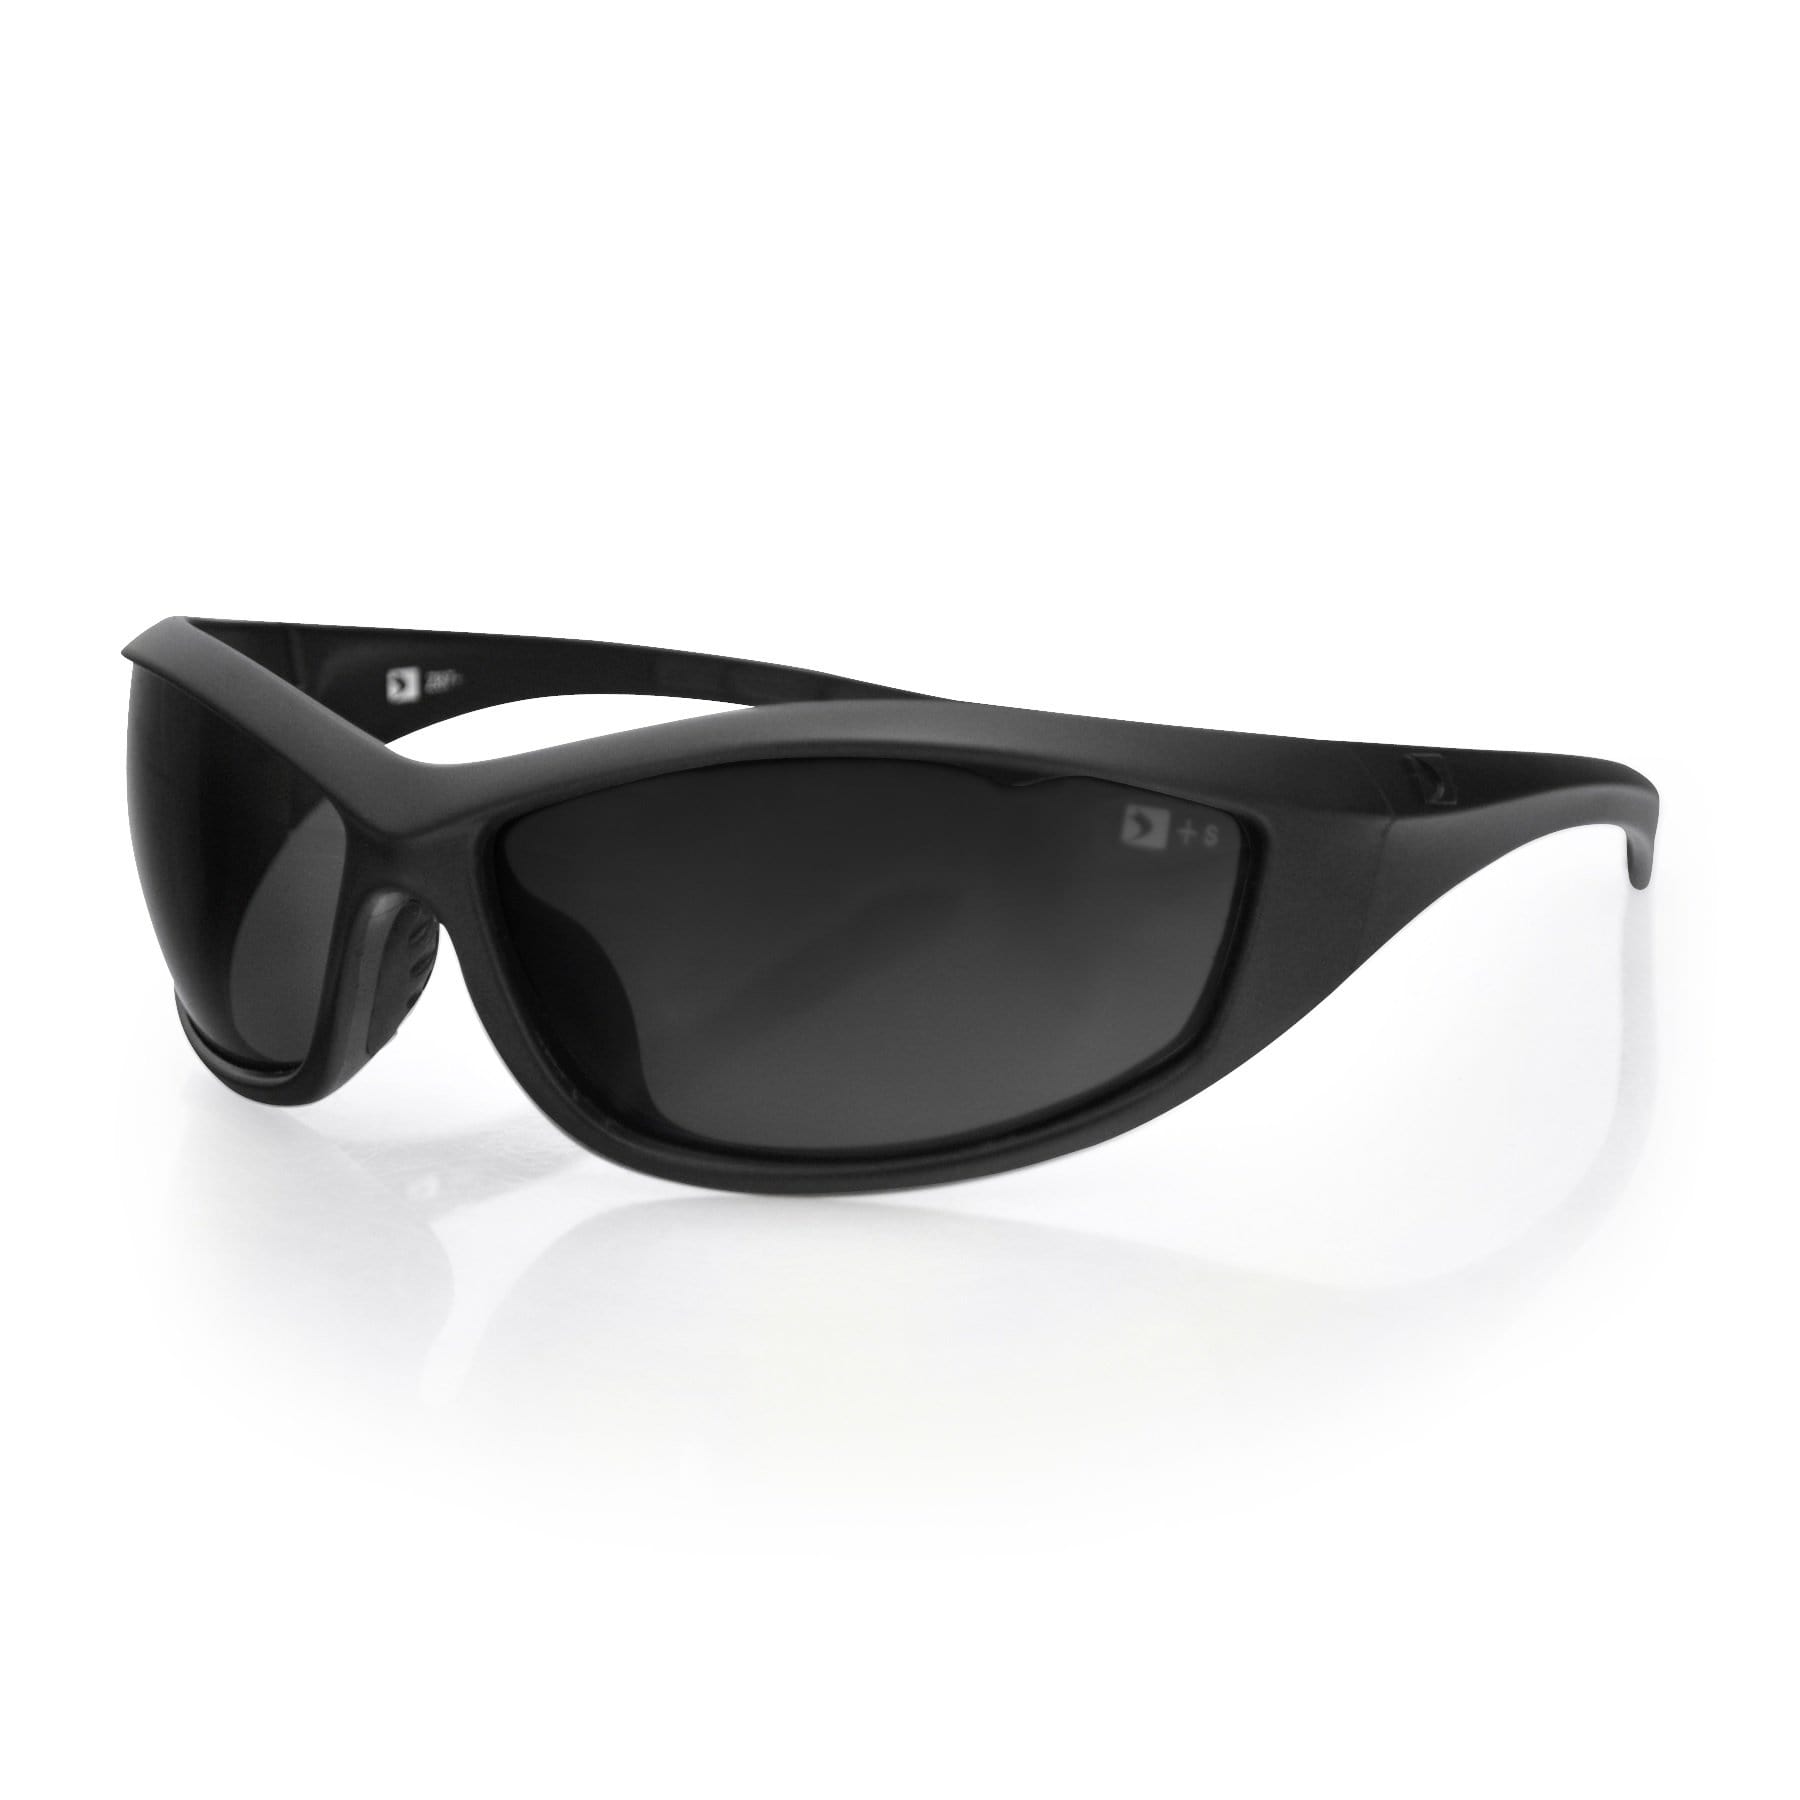 Bobster Apparel : Eyewear - Sunglasses Bobster Zulu Ballistics Eyewear-Black Frame-Anti-fog Smoked